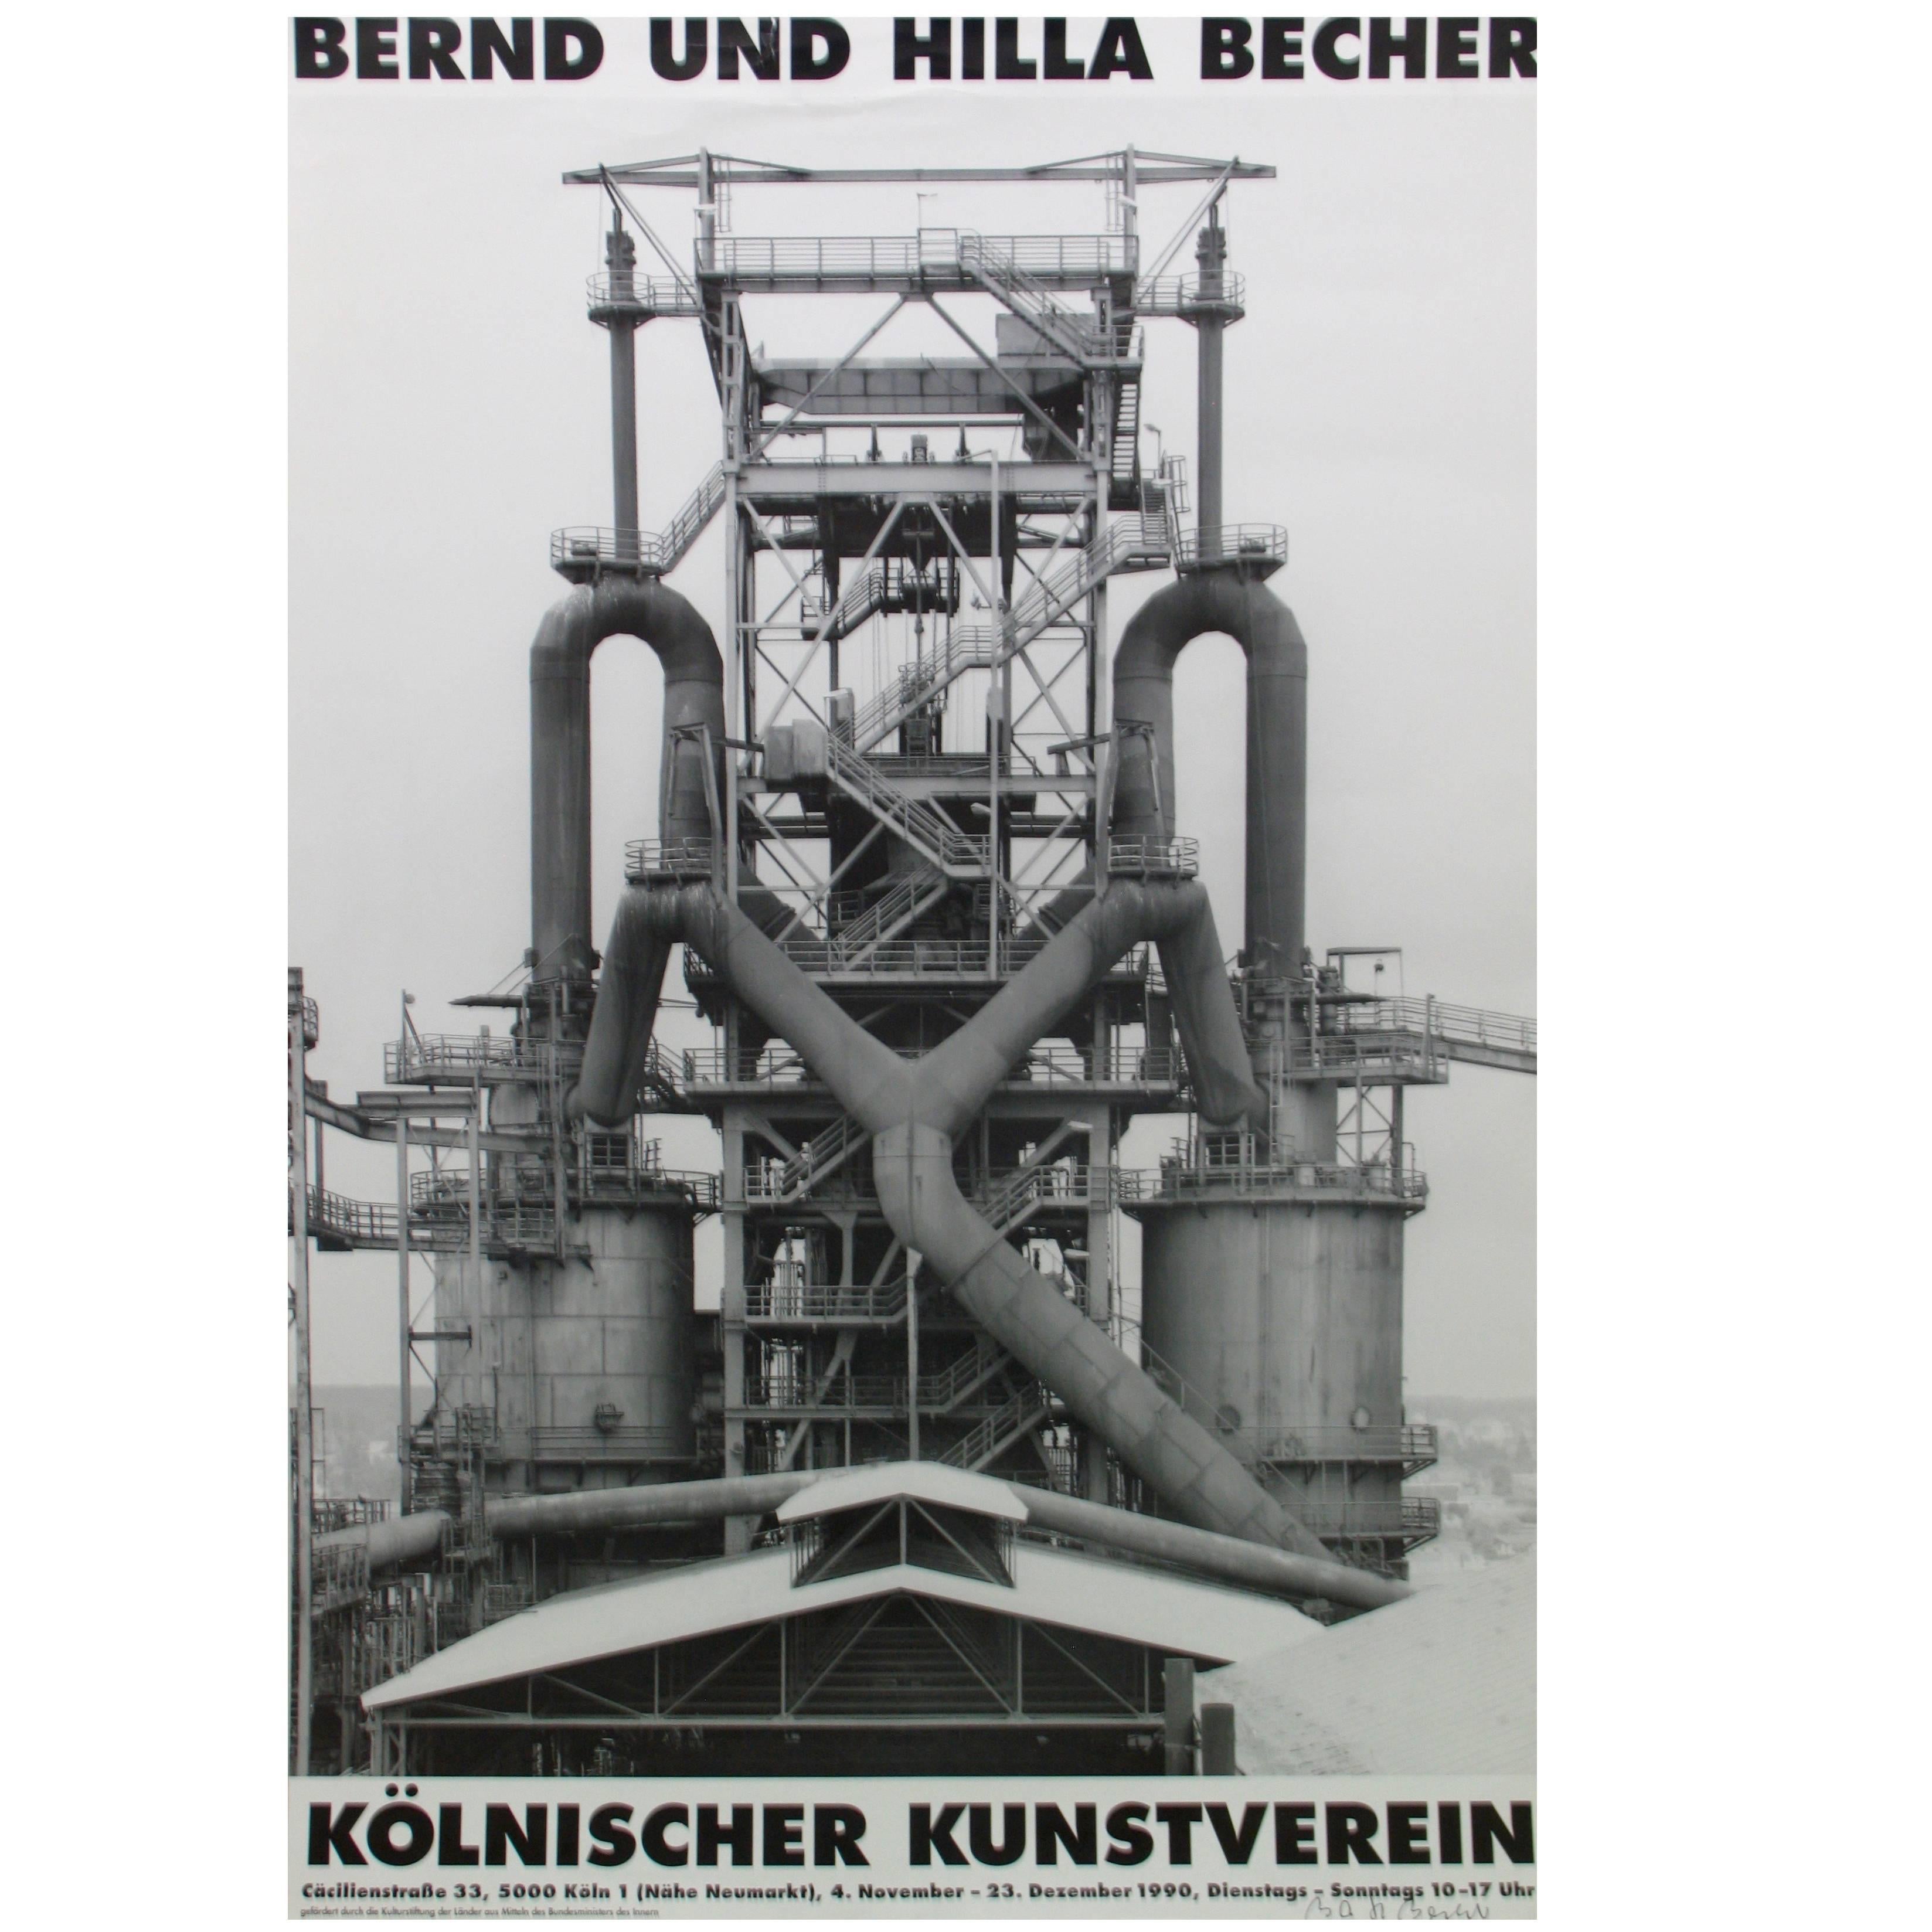 Bernd and Hilla Becher Signed Poster Kolnischer Kunstverein, 1990 For Sale